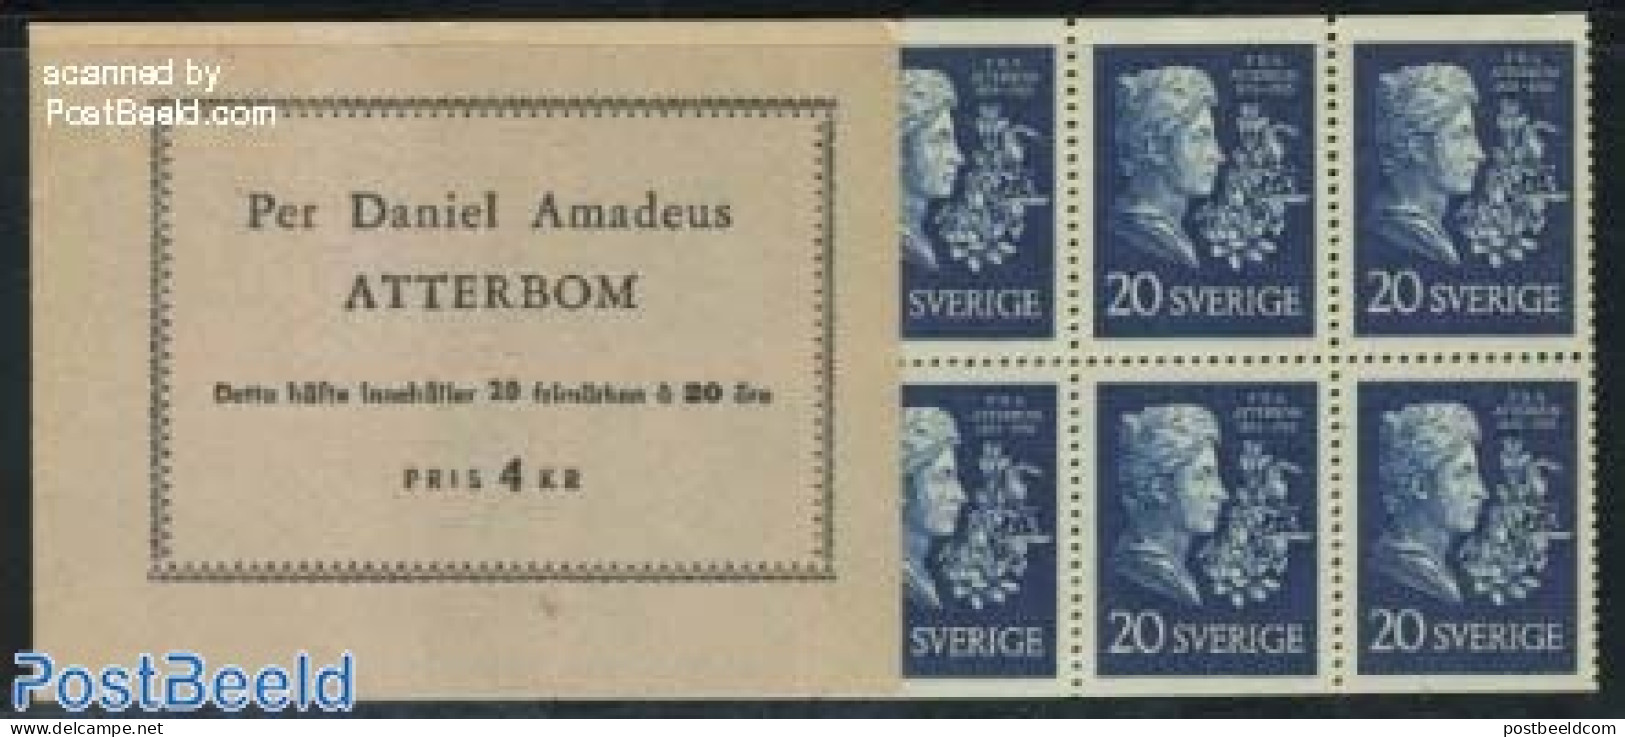 Sweden 1955 Per Daniel Amadeus Atterbom Booklet, Mint NH, Stamp Booklets - Art - Authors - Unused Stamps